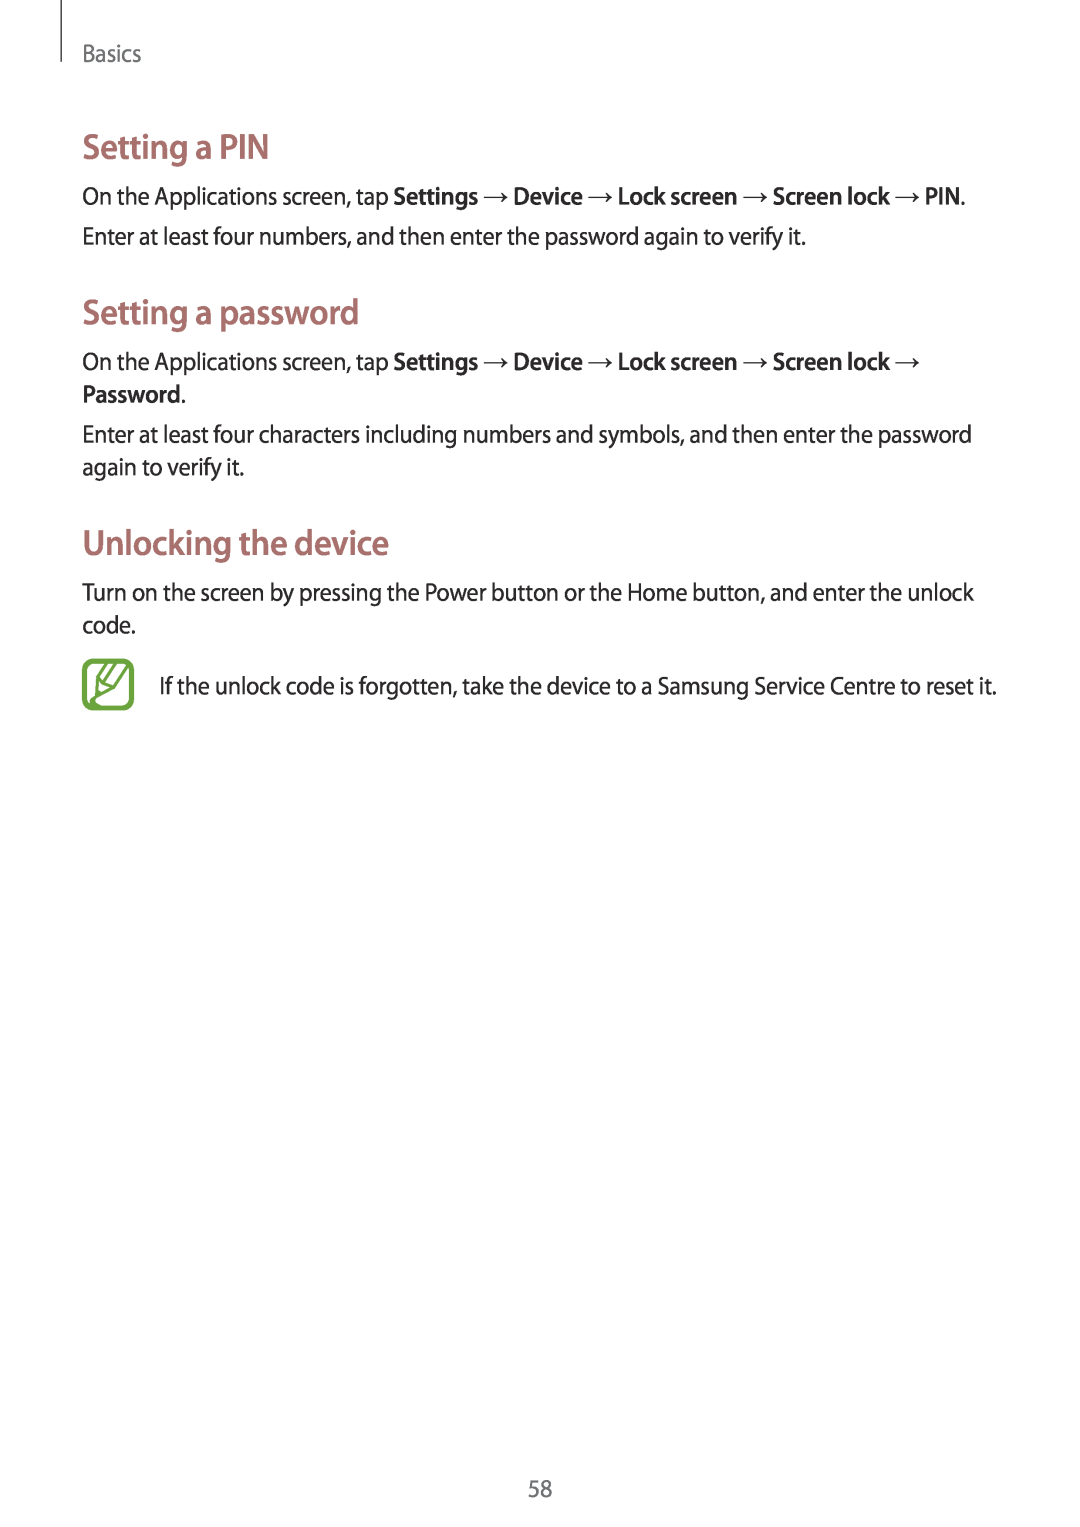 Samsung SM-N9005ZWEKSA, SM-N9005ZKEEGY, SM-N9005ZIEEGY manual Setting a PIN, Setting a password, Unlocking the device, Basics 